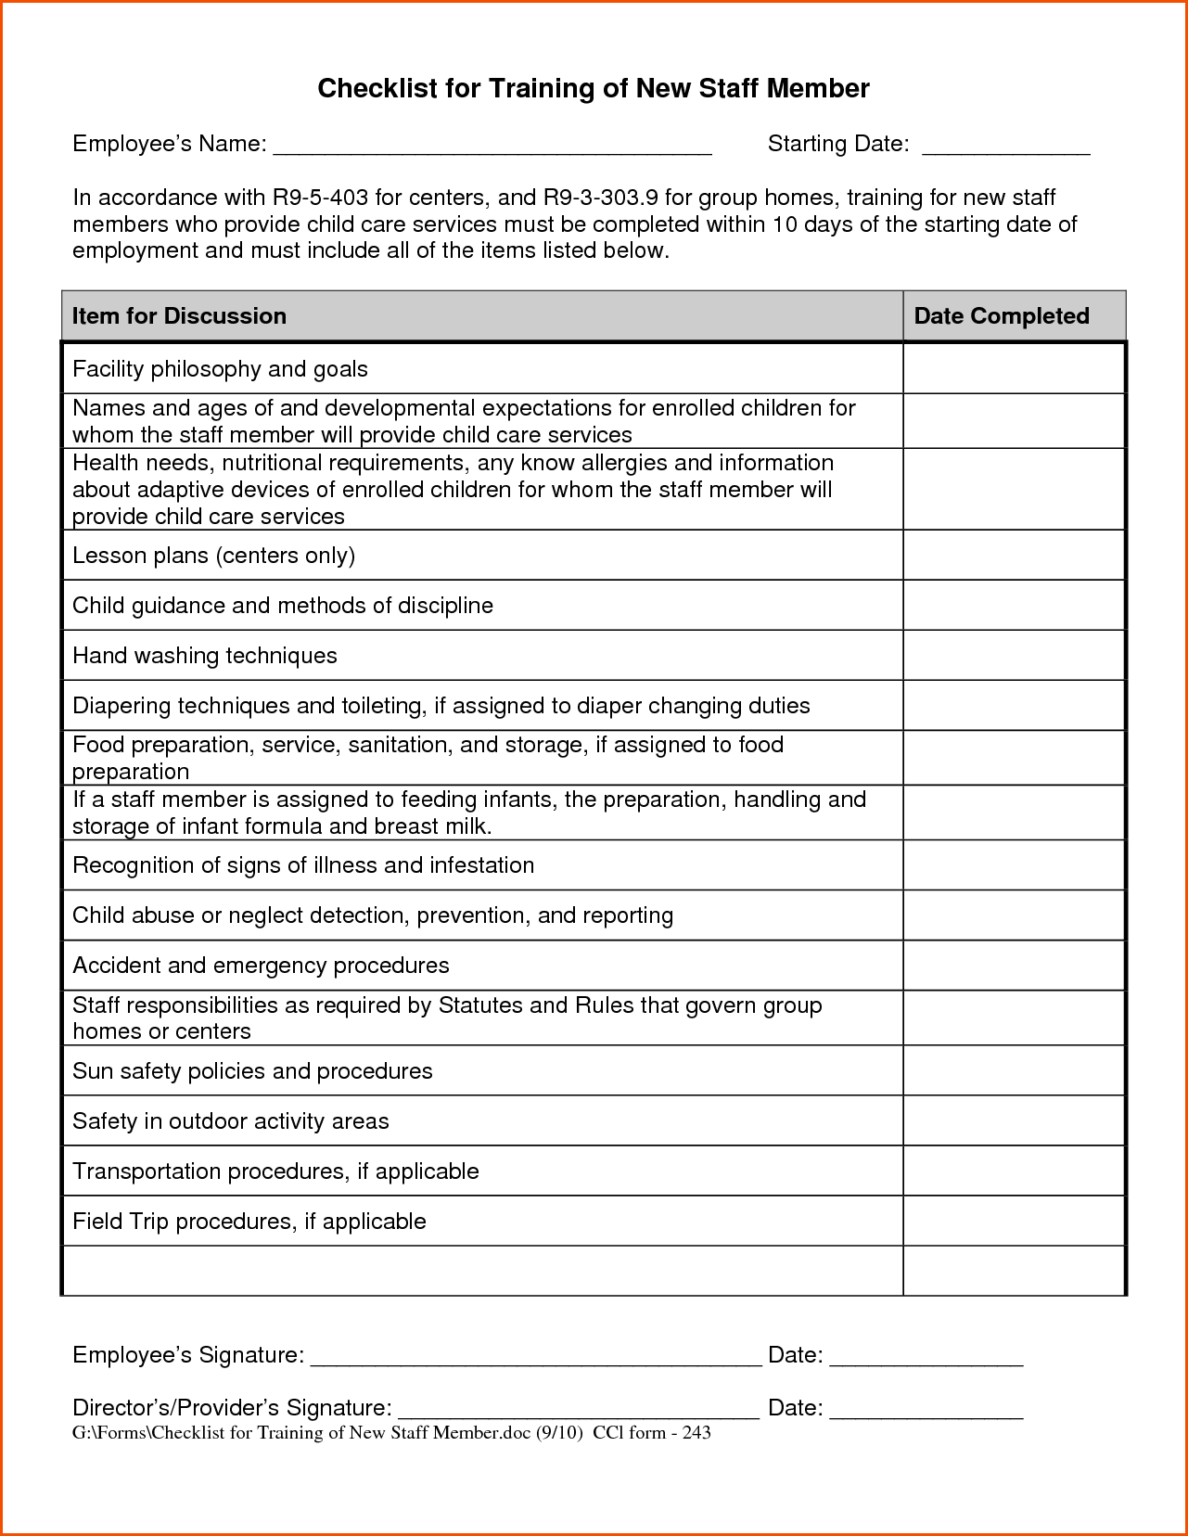 new-employee-training-checklist-template-checklist-throughout